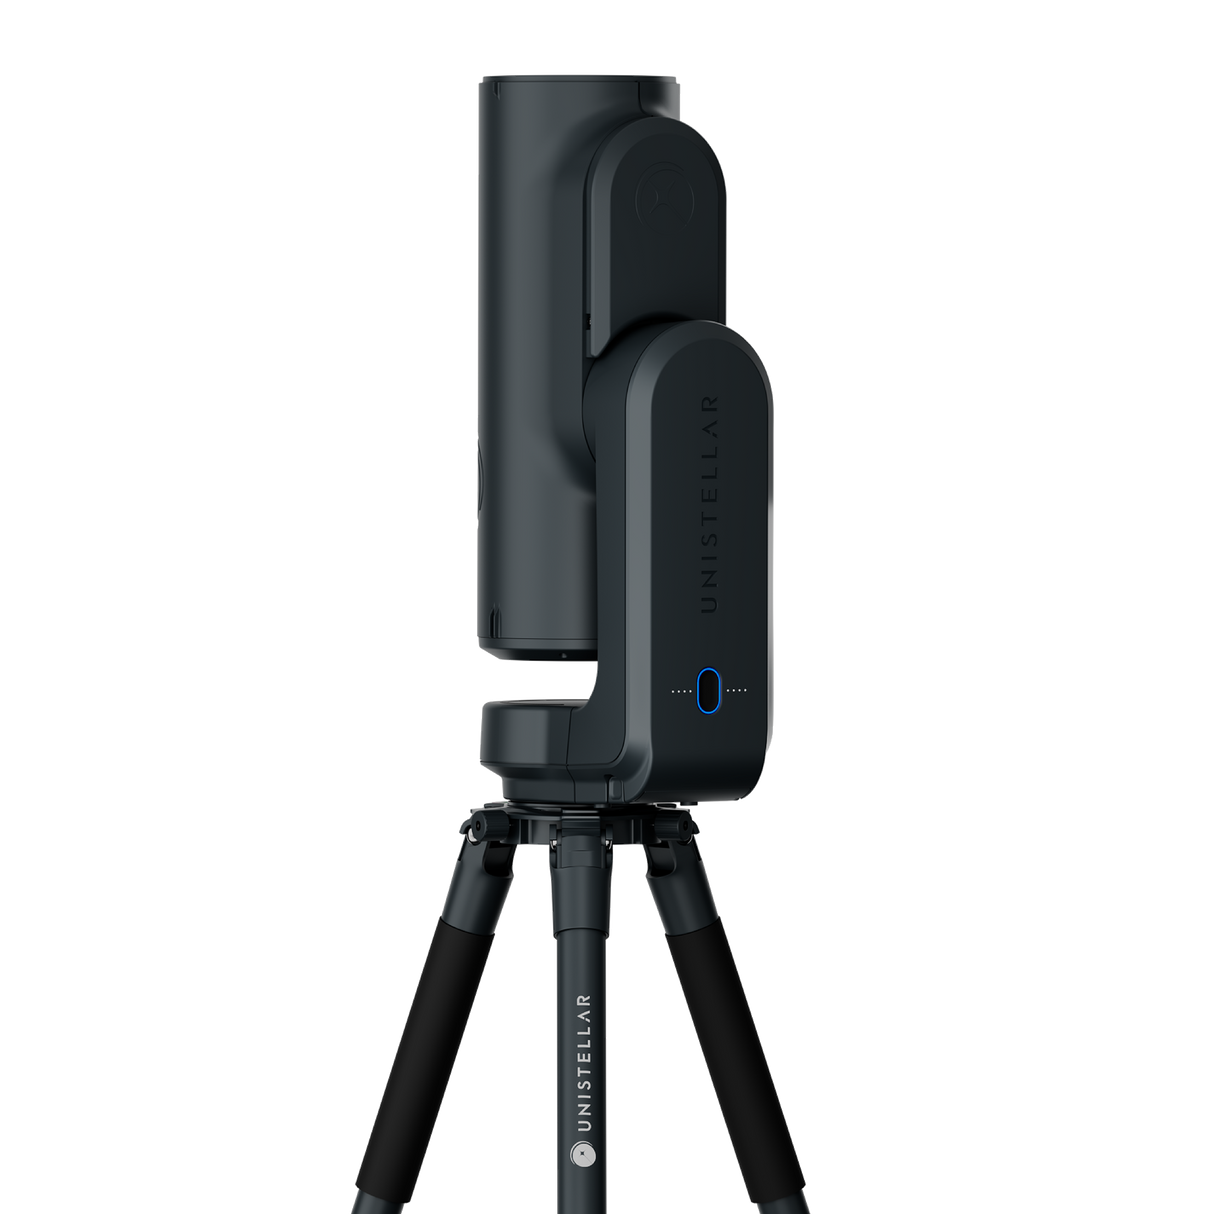 Unistellar Odyssey - Fully automatic & compact smart telescope